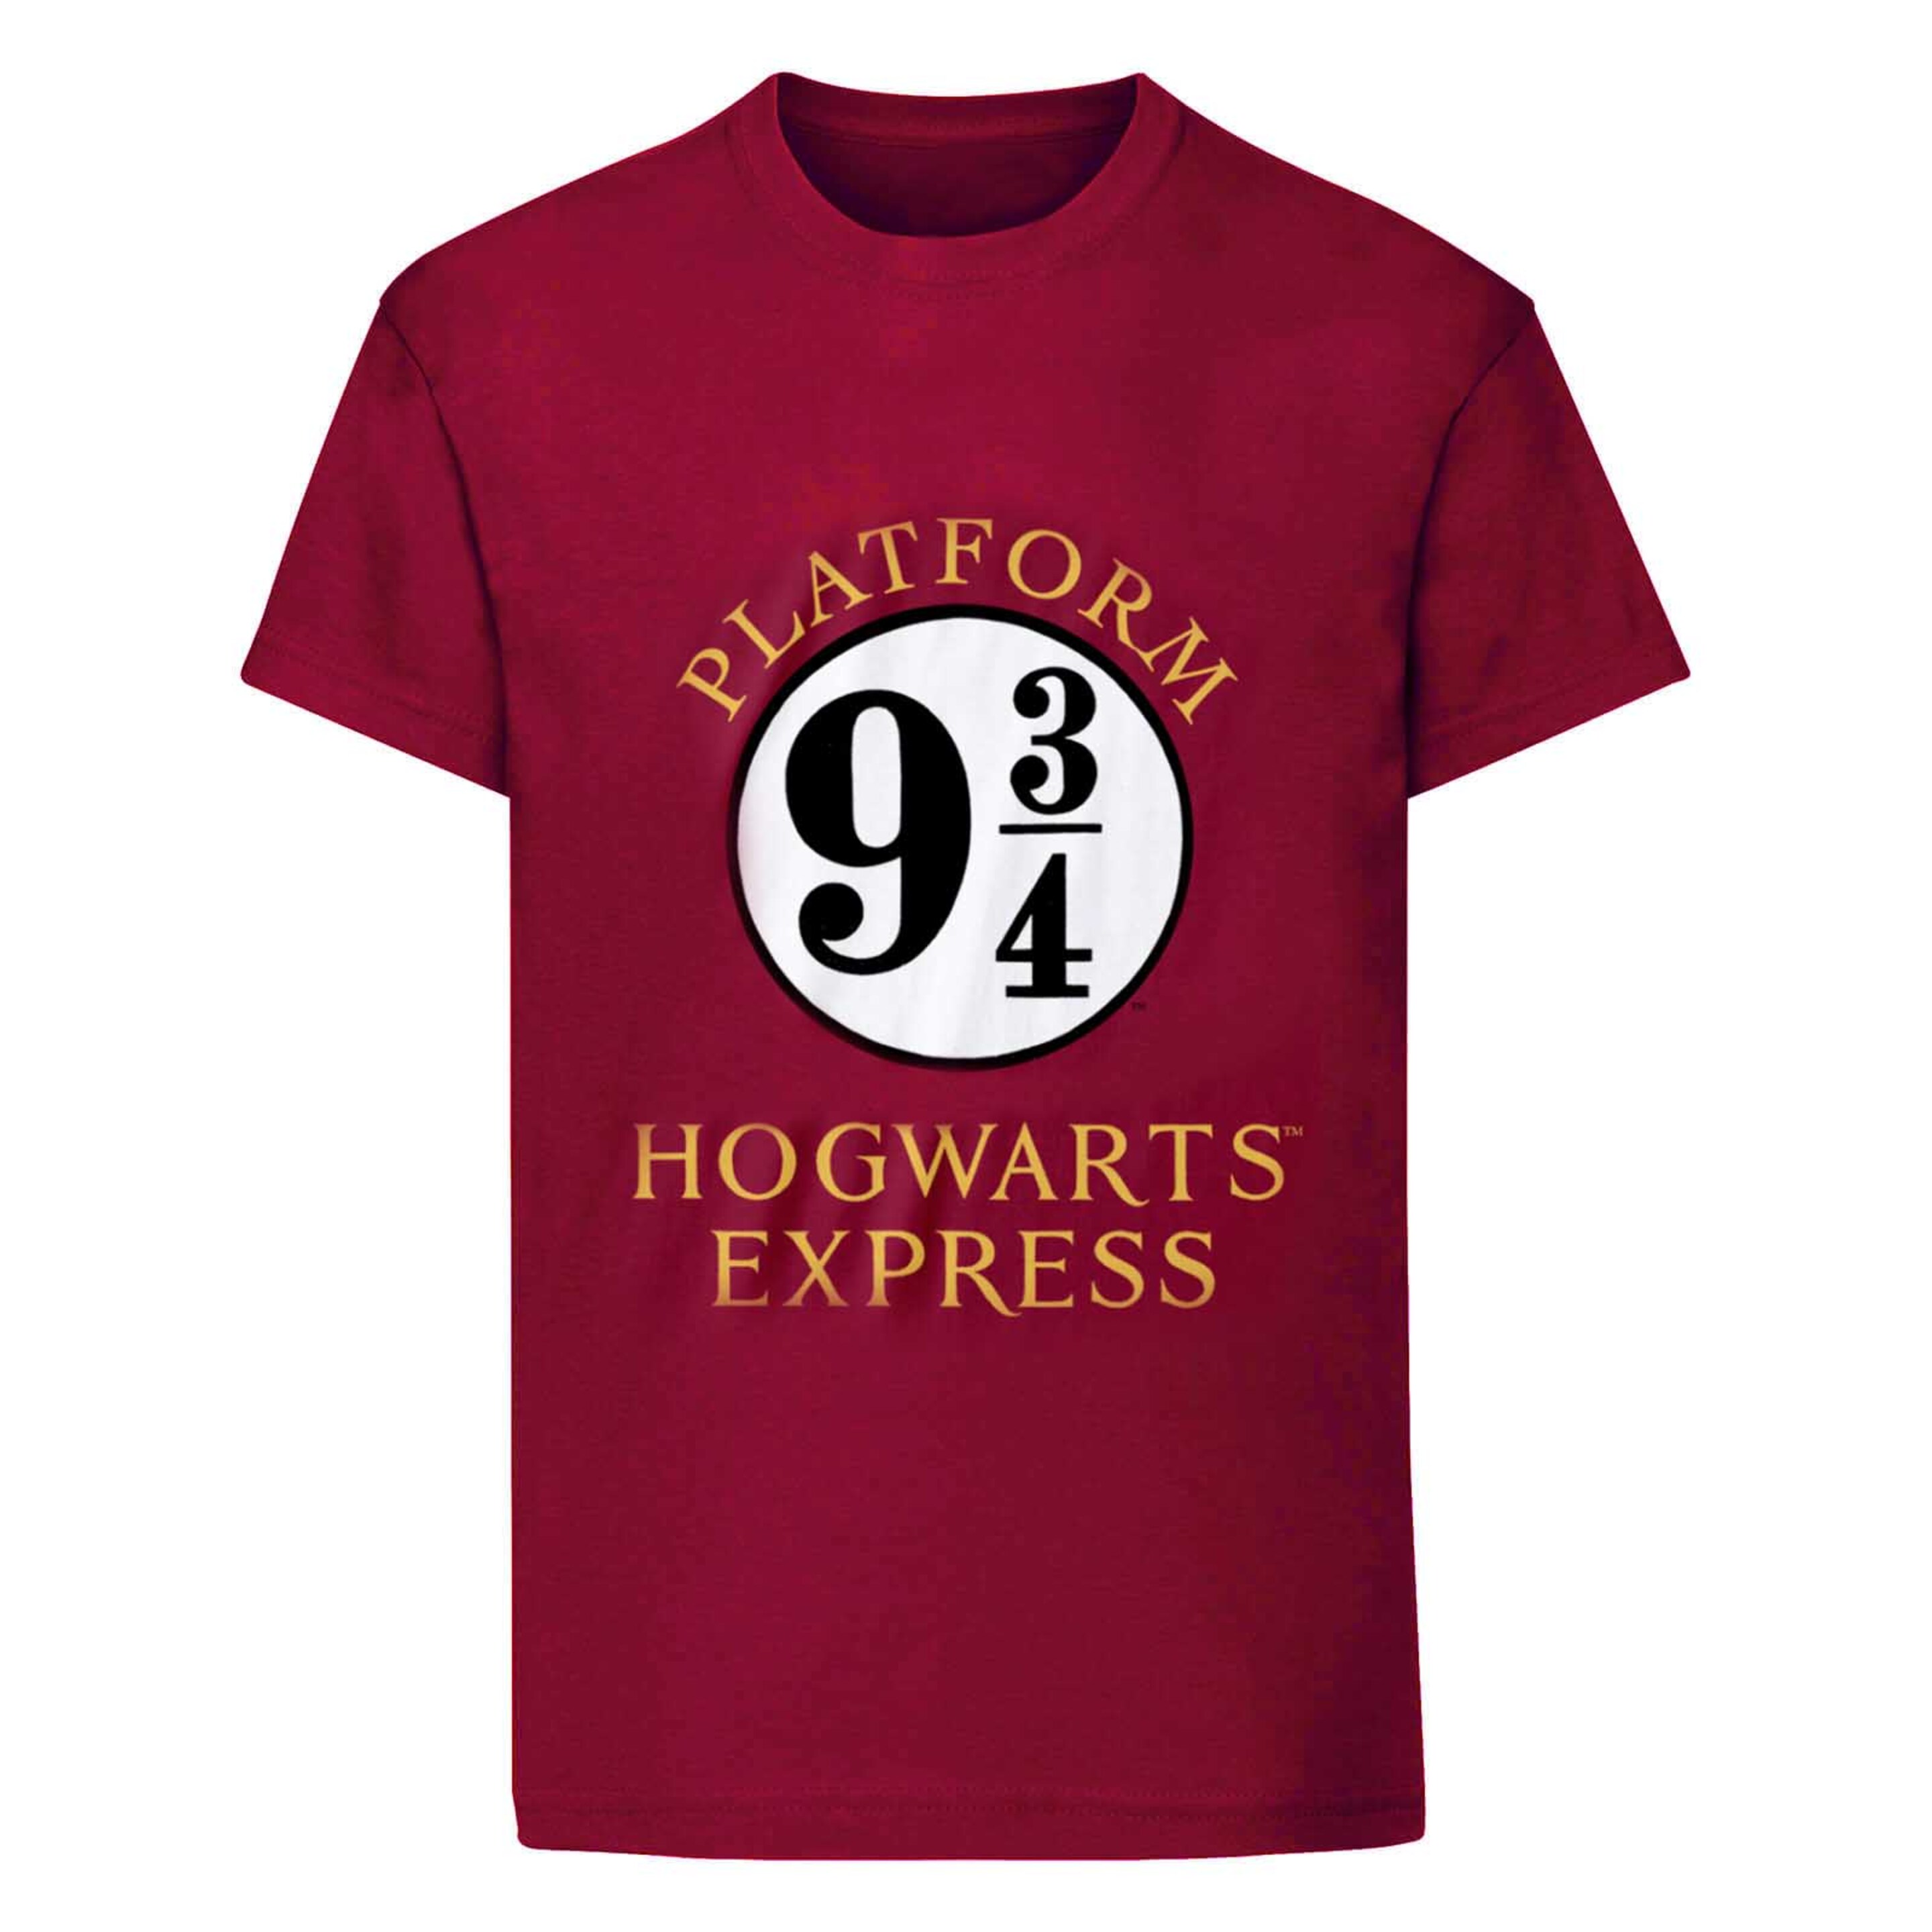 Camiseta De Hogwarts Harry Potter